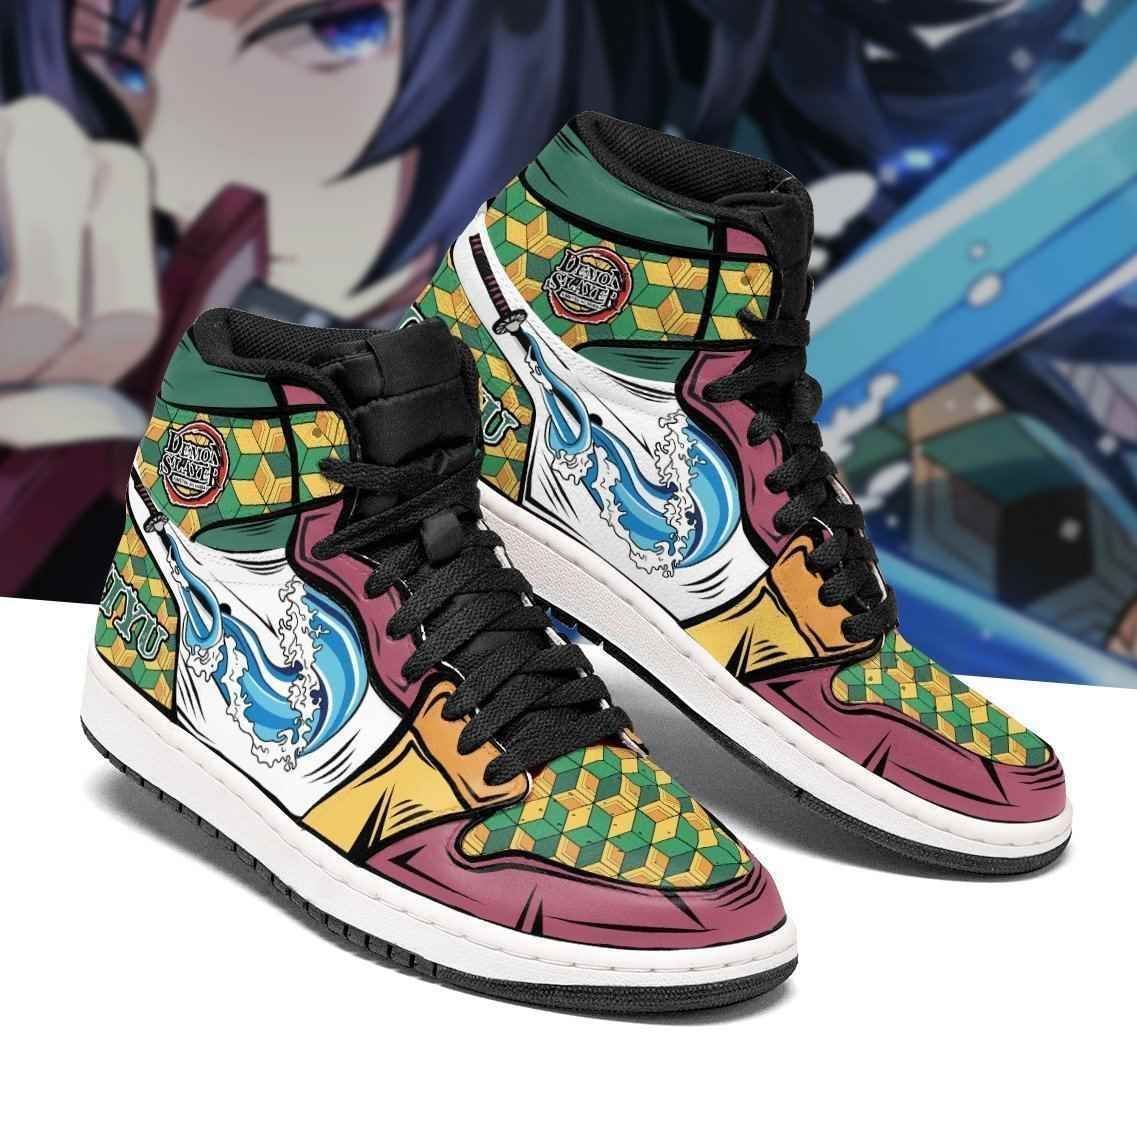 Giyu Costume Demon Slayer Sneakers Anime Air Jordan Shoes Sport